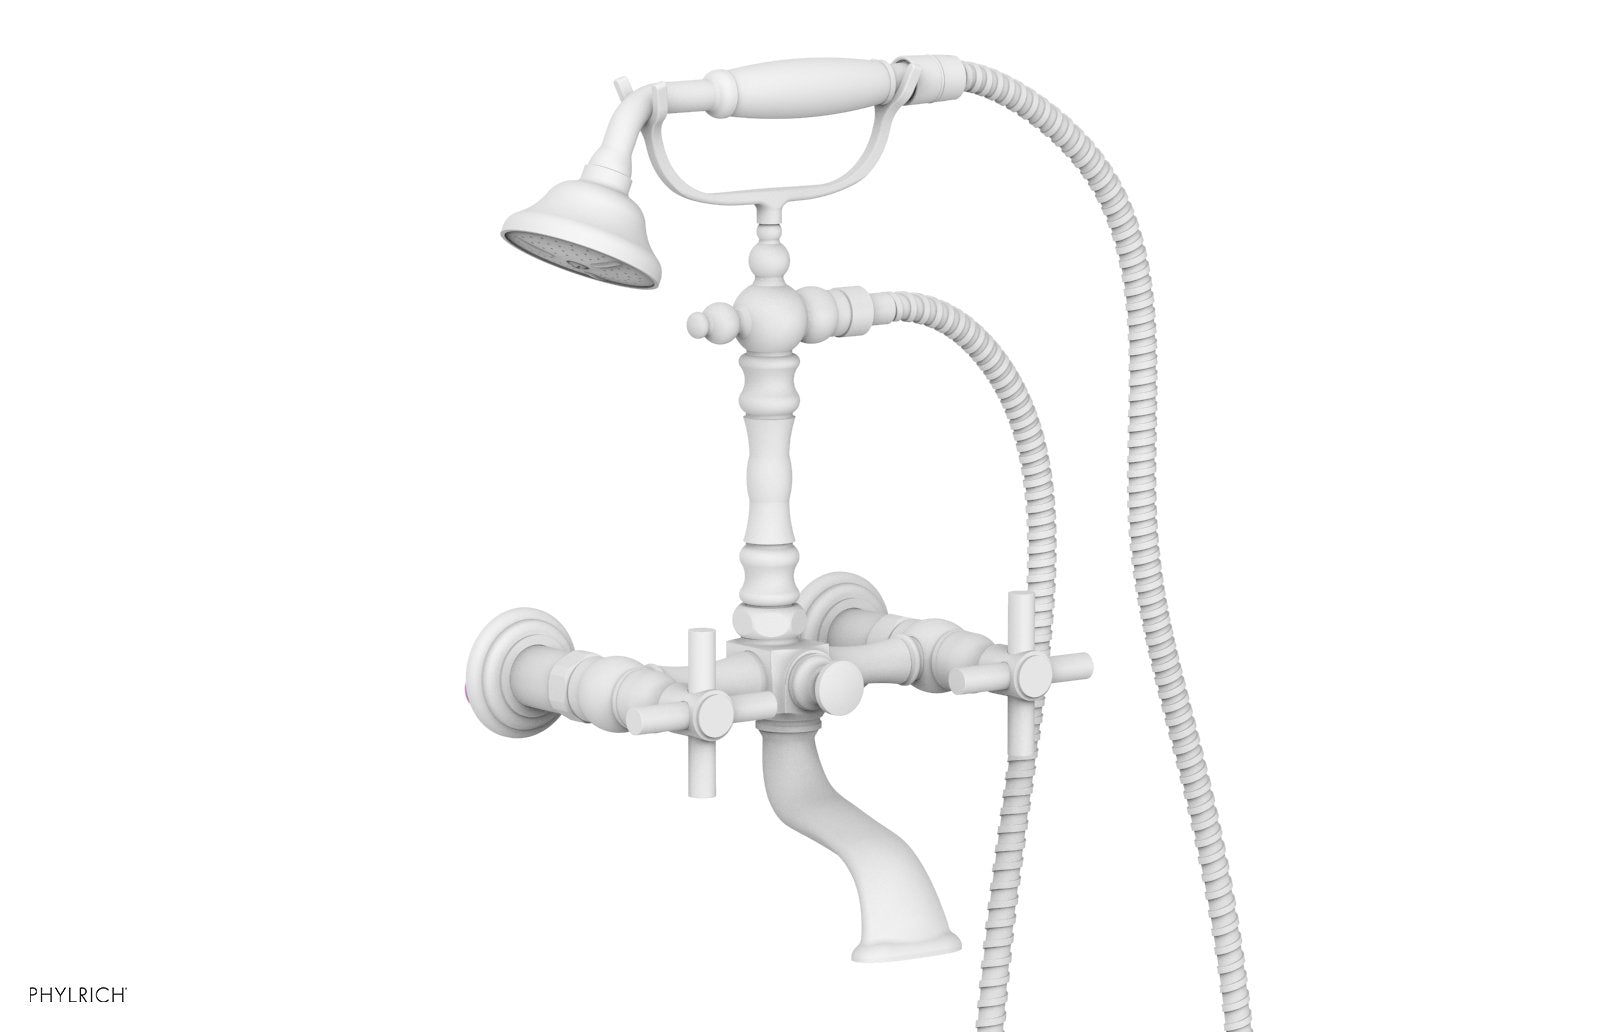 Phylrich BASIC Exposed Tub & Hand Shower - Tubular Handle